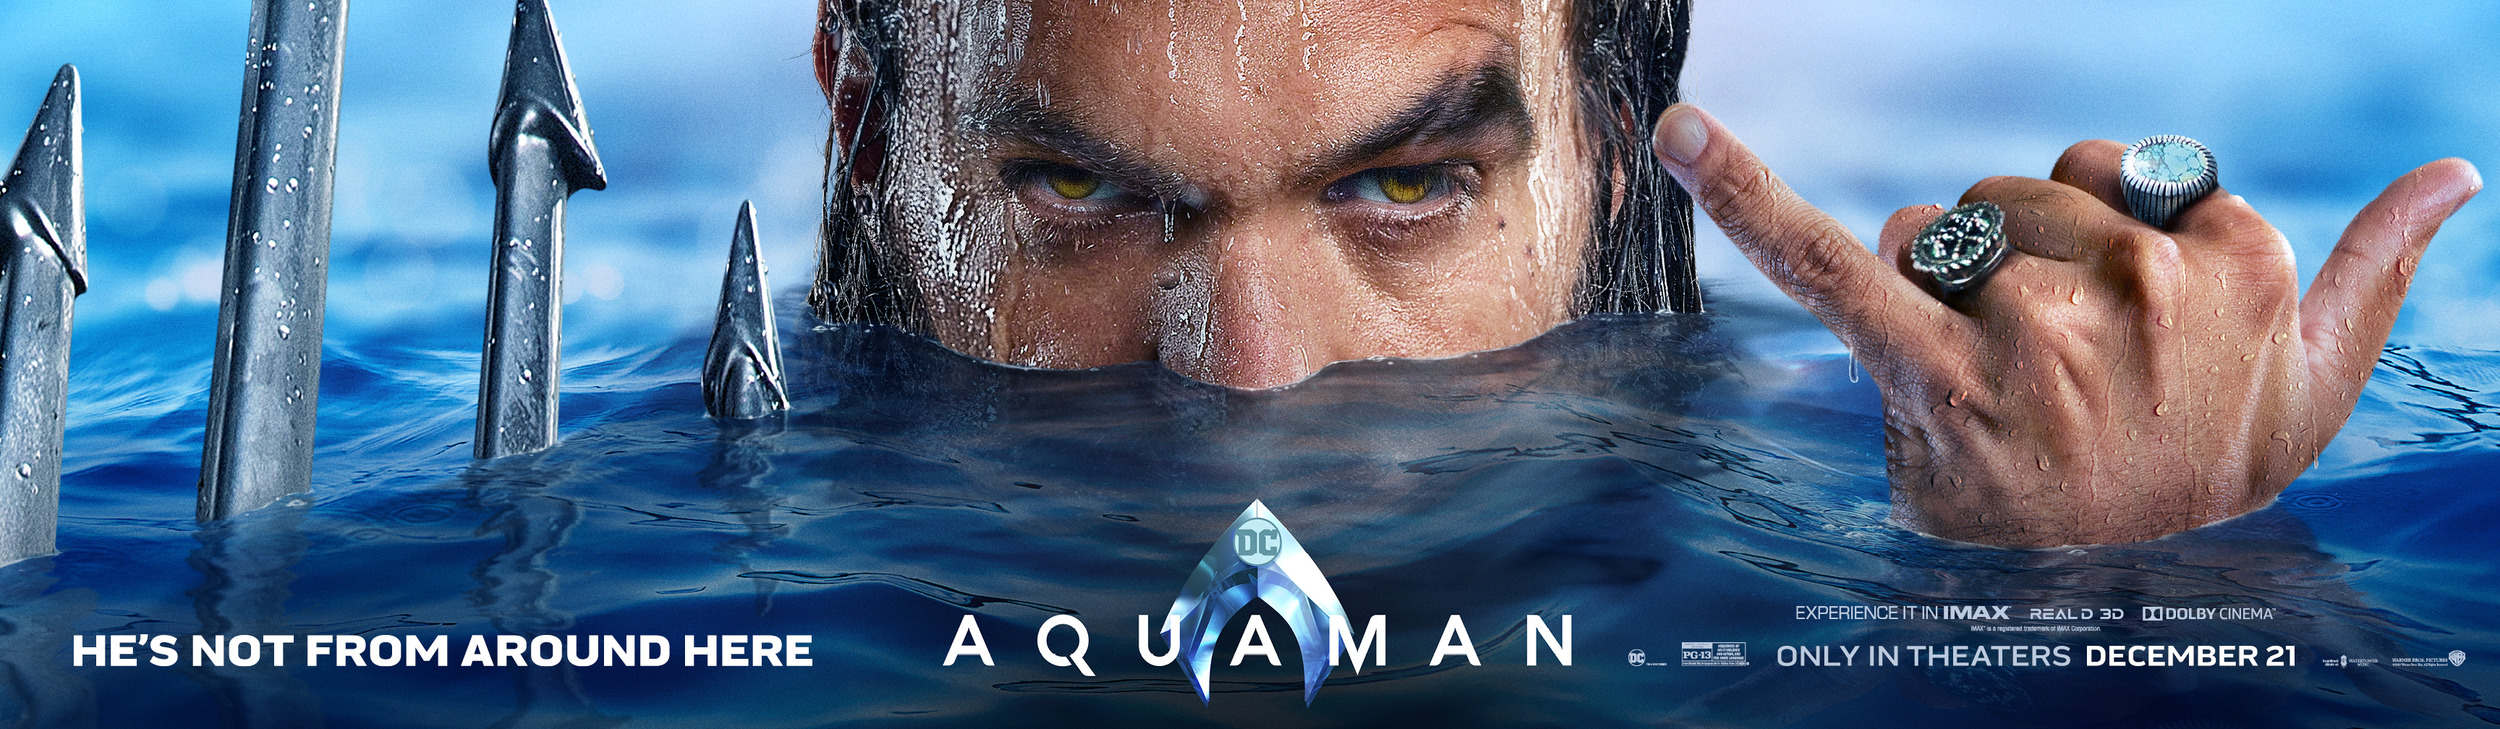 Mega Sized Movie Poster Image for Aquaman (#16 of 22)